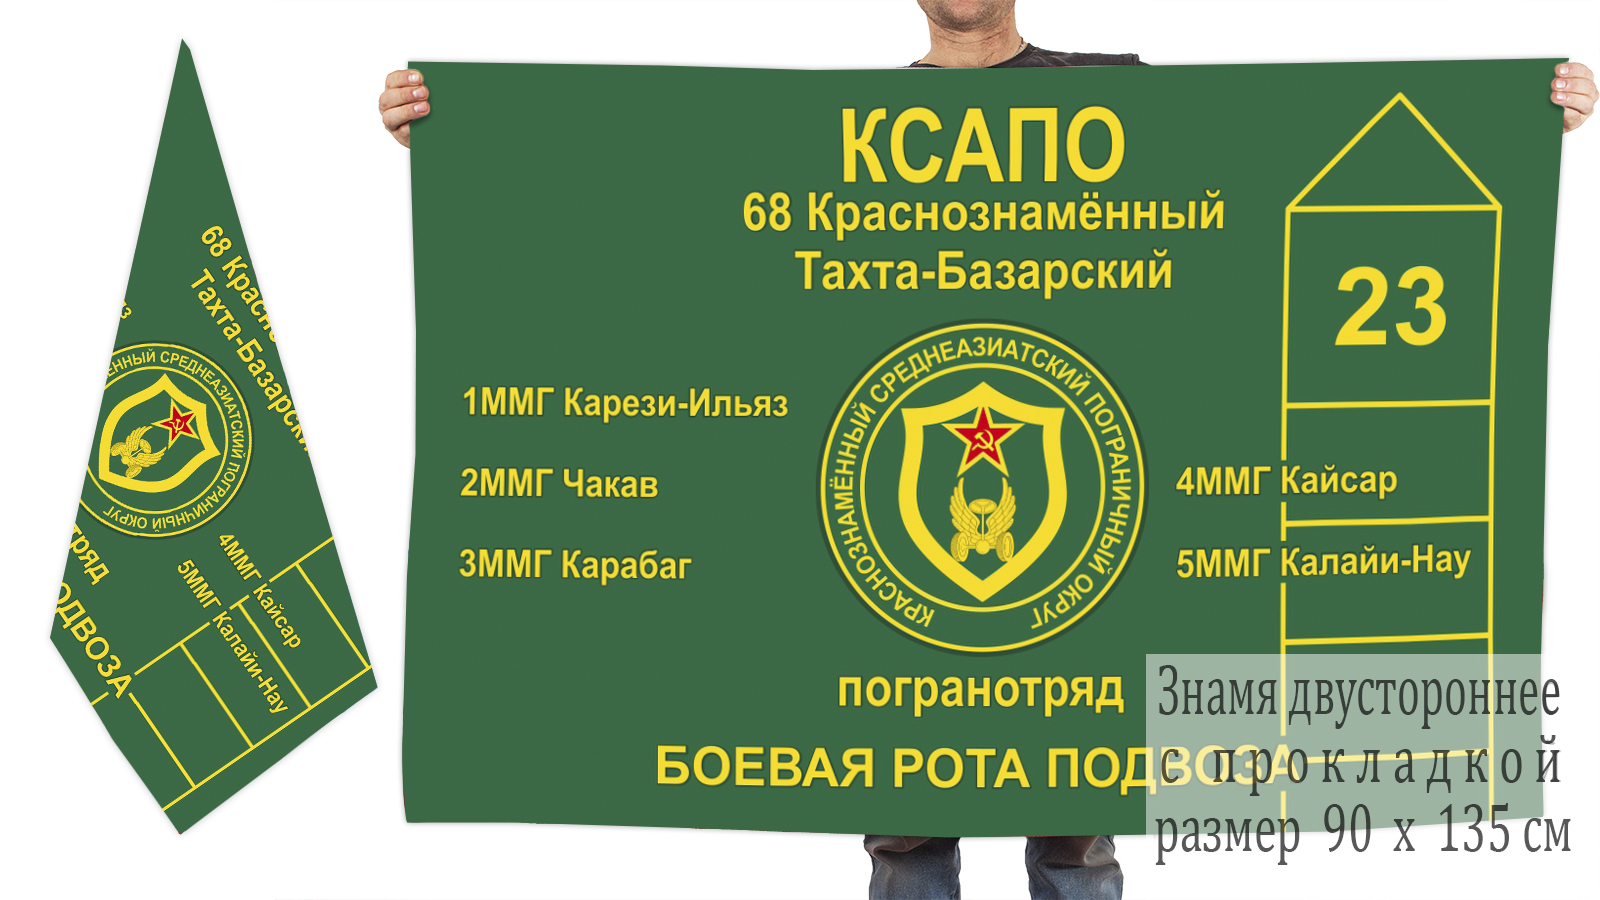 Купить в интернет магазине флаг 68-го Тахта-Базарского погранотряда